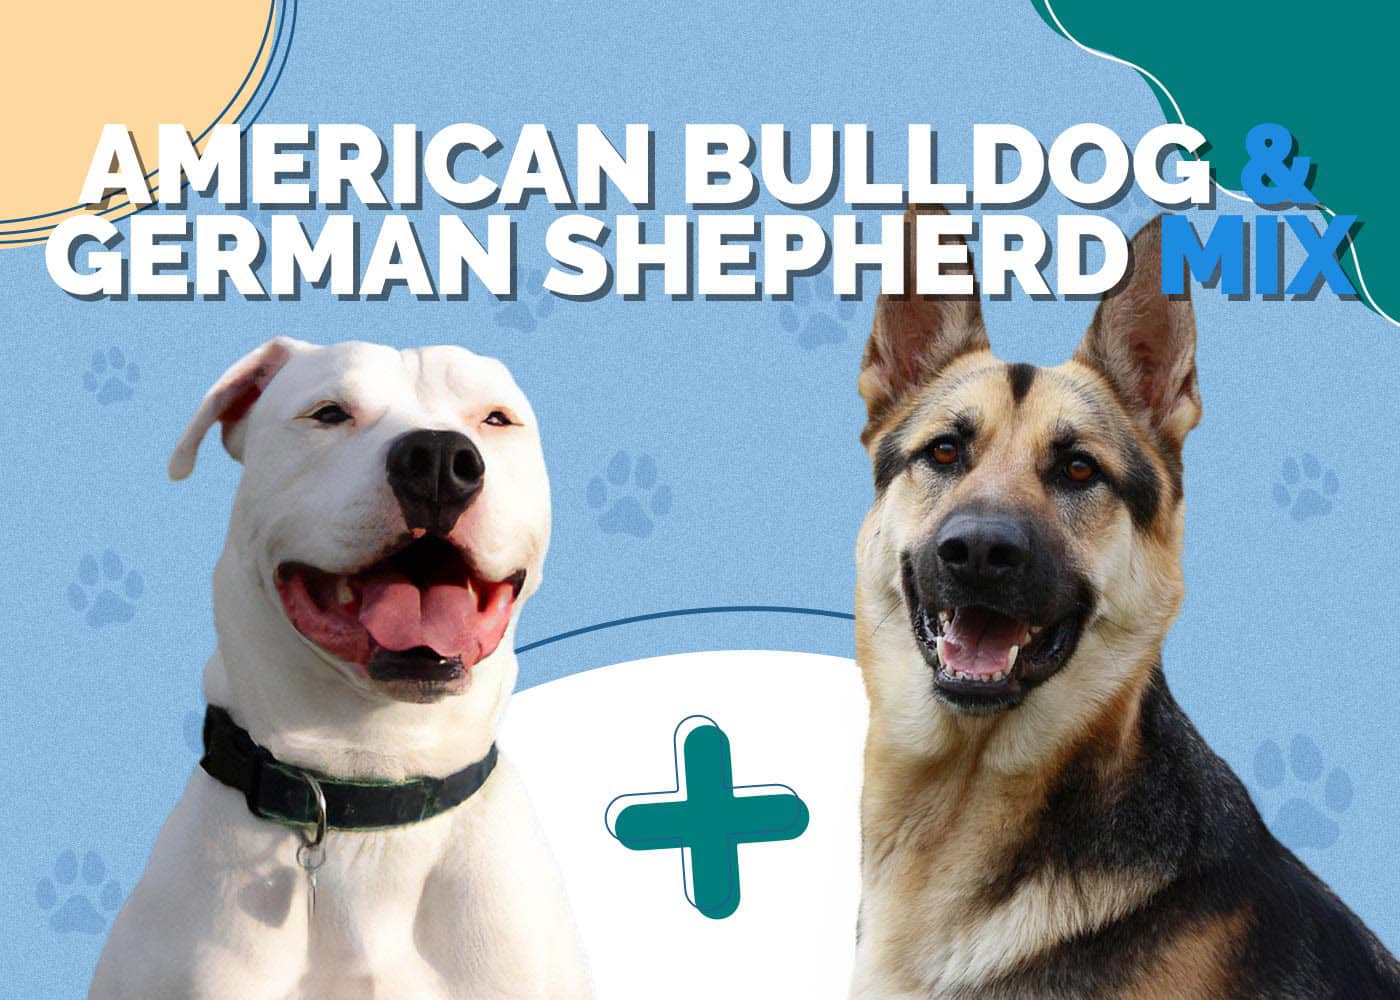 American Bulldog & German Shepherd Mix